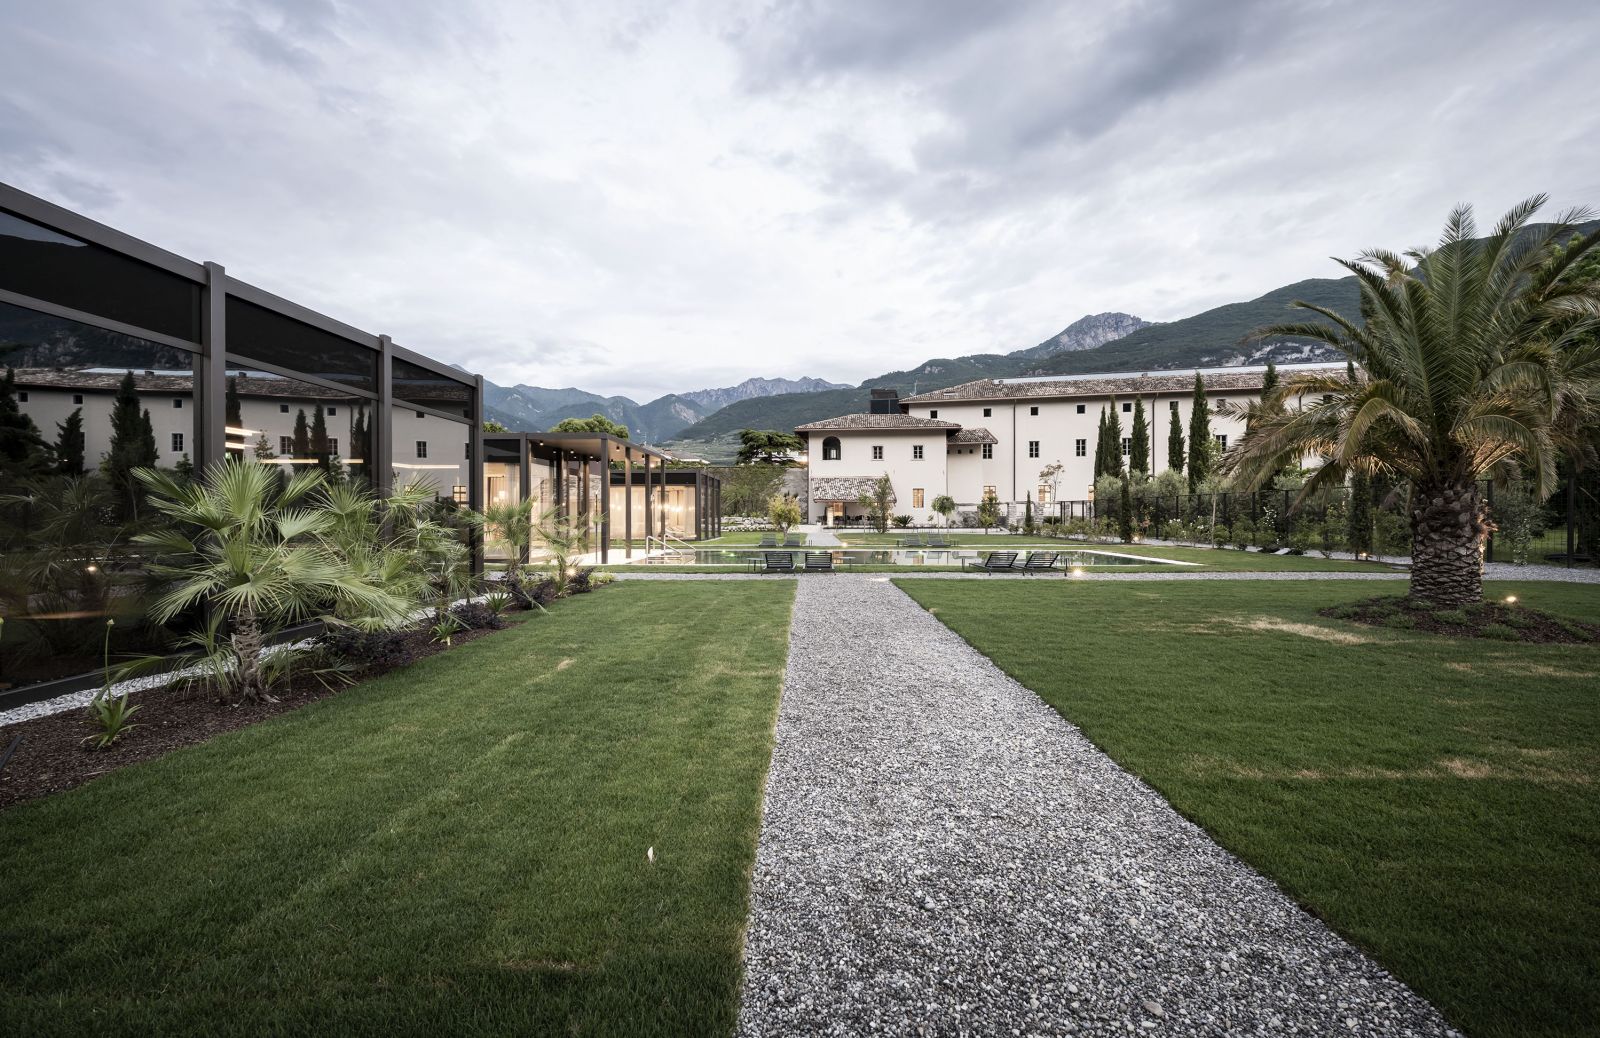 Monastero Arx Vivendi Hotel | Garden Spa walled gardens | Architects: noa* | Lake Garda, Arco Trentino, Italy | The Aficionados